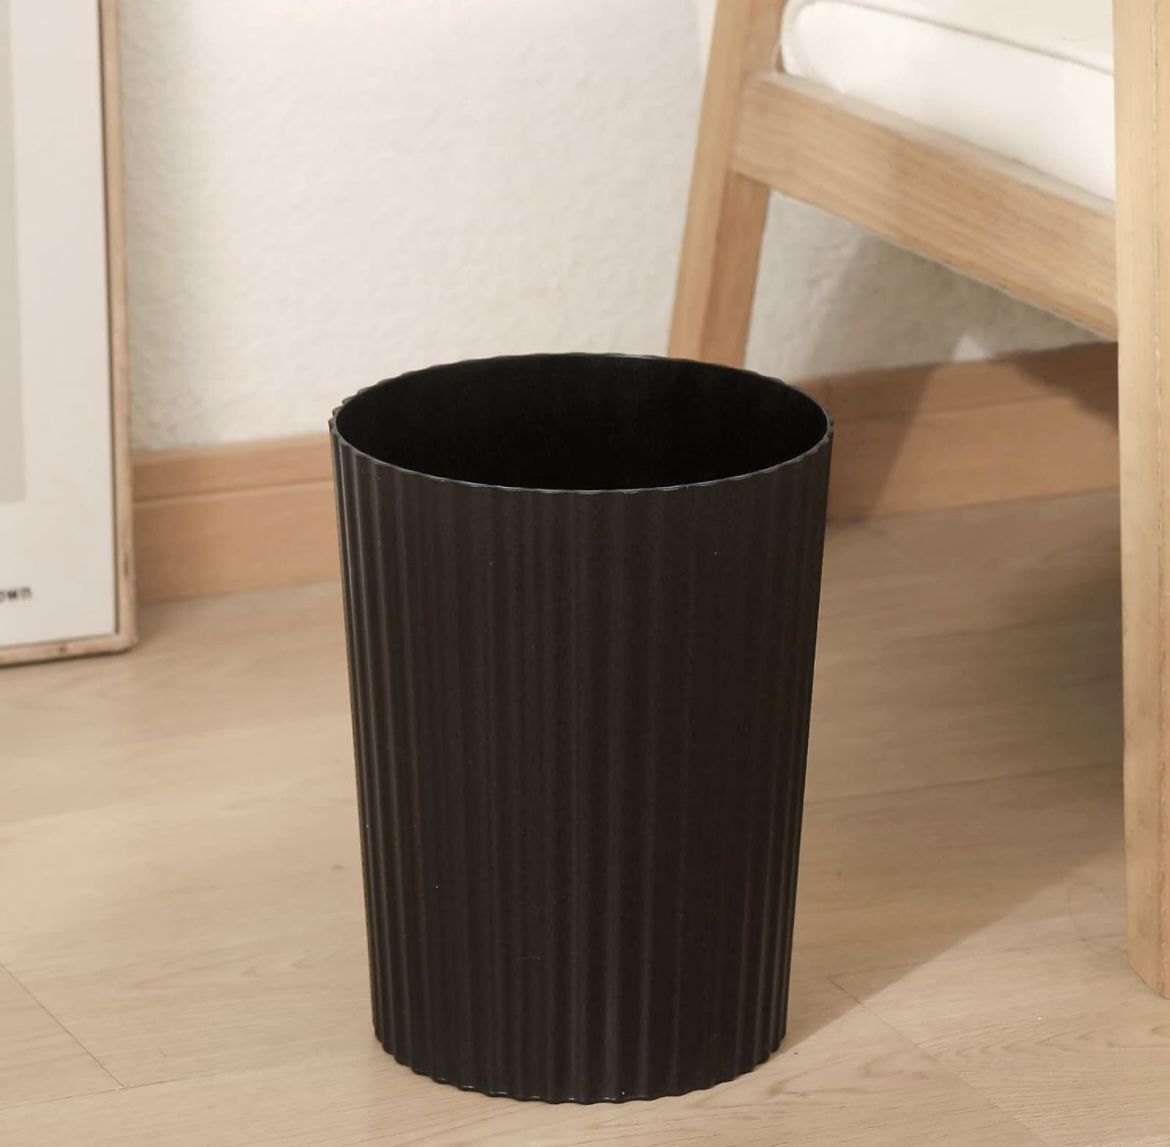 JiatuA Small Trash Can Plastic Wastebasket Round